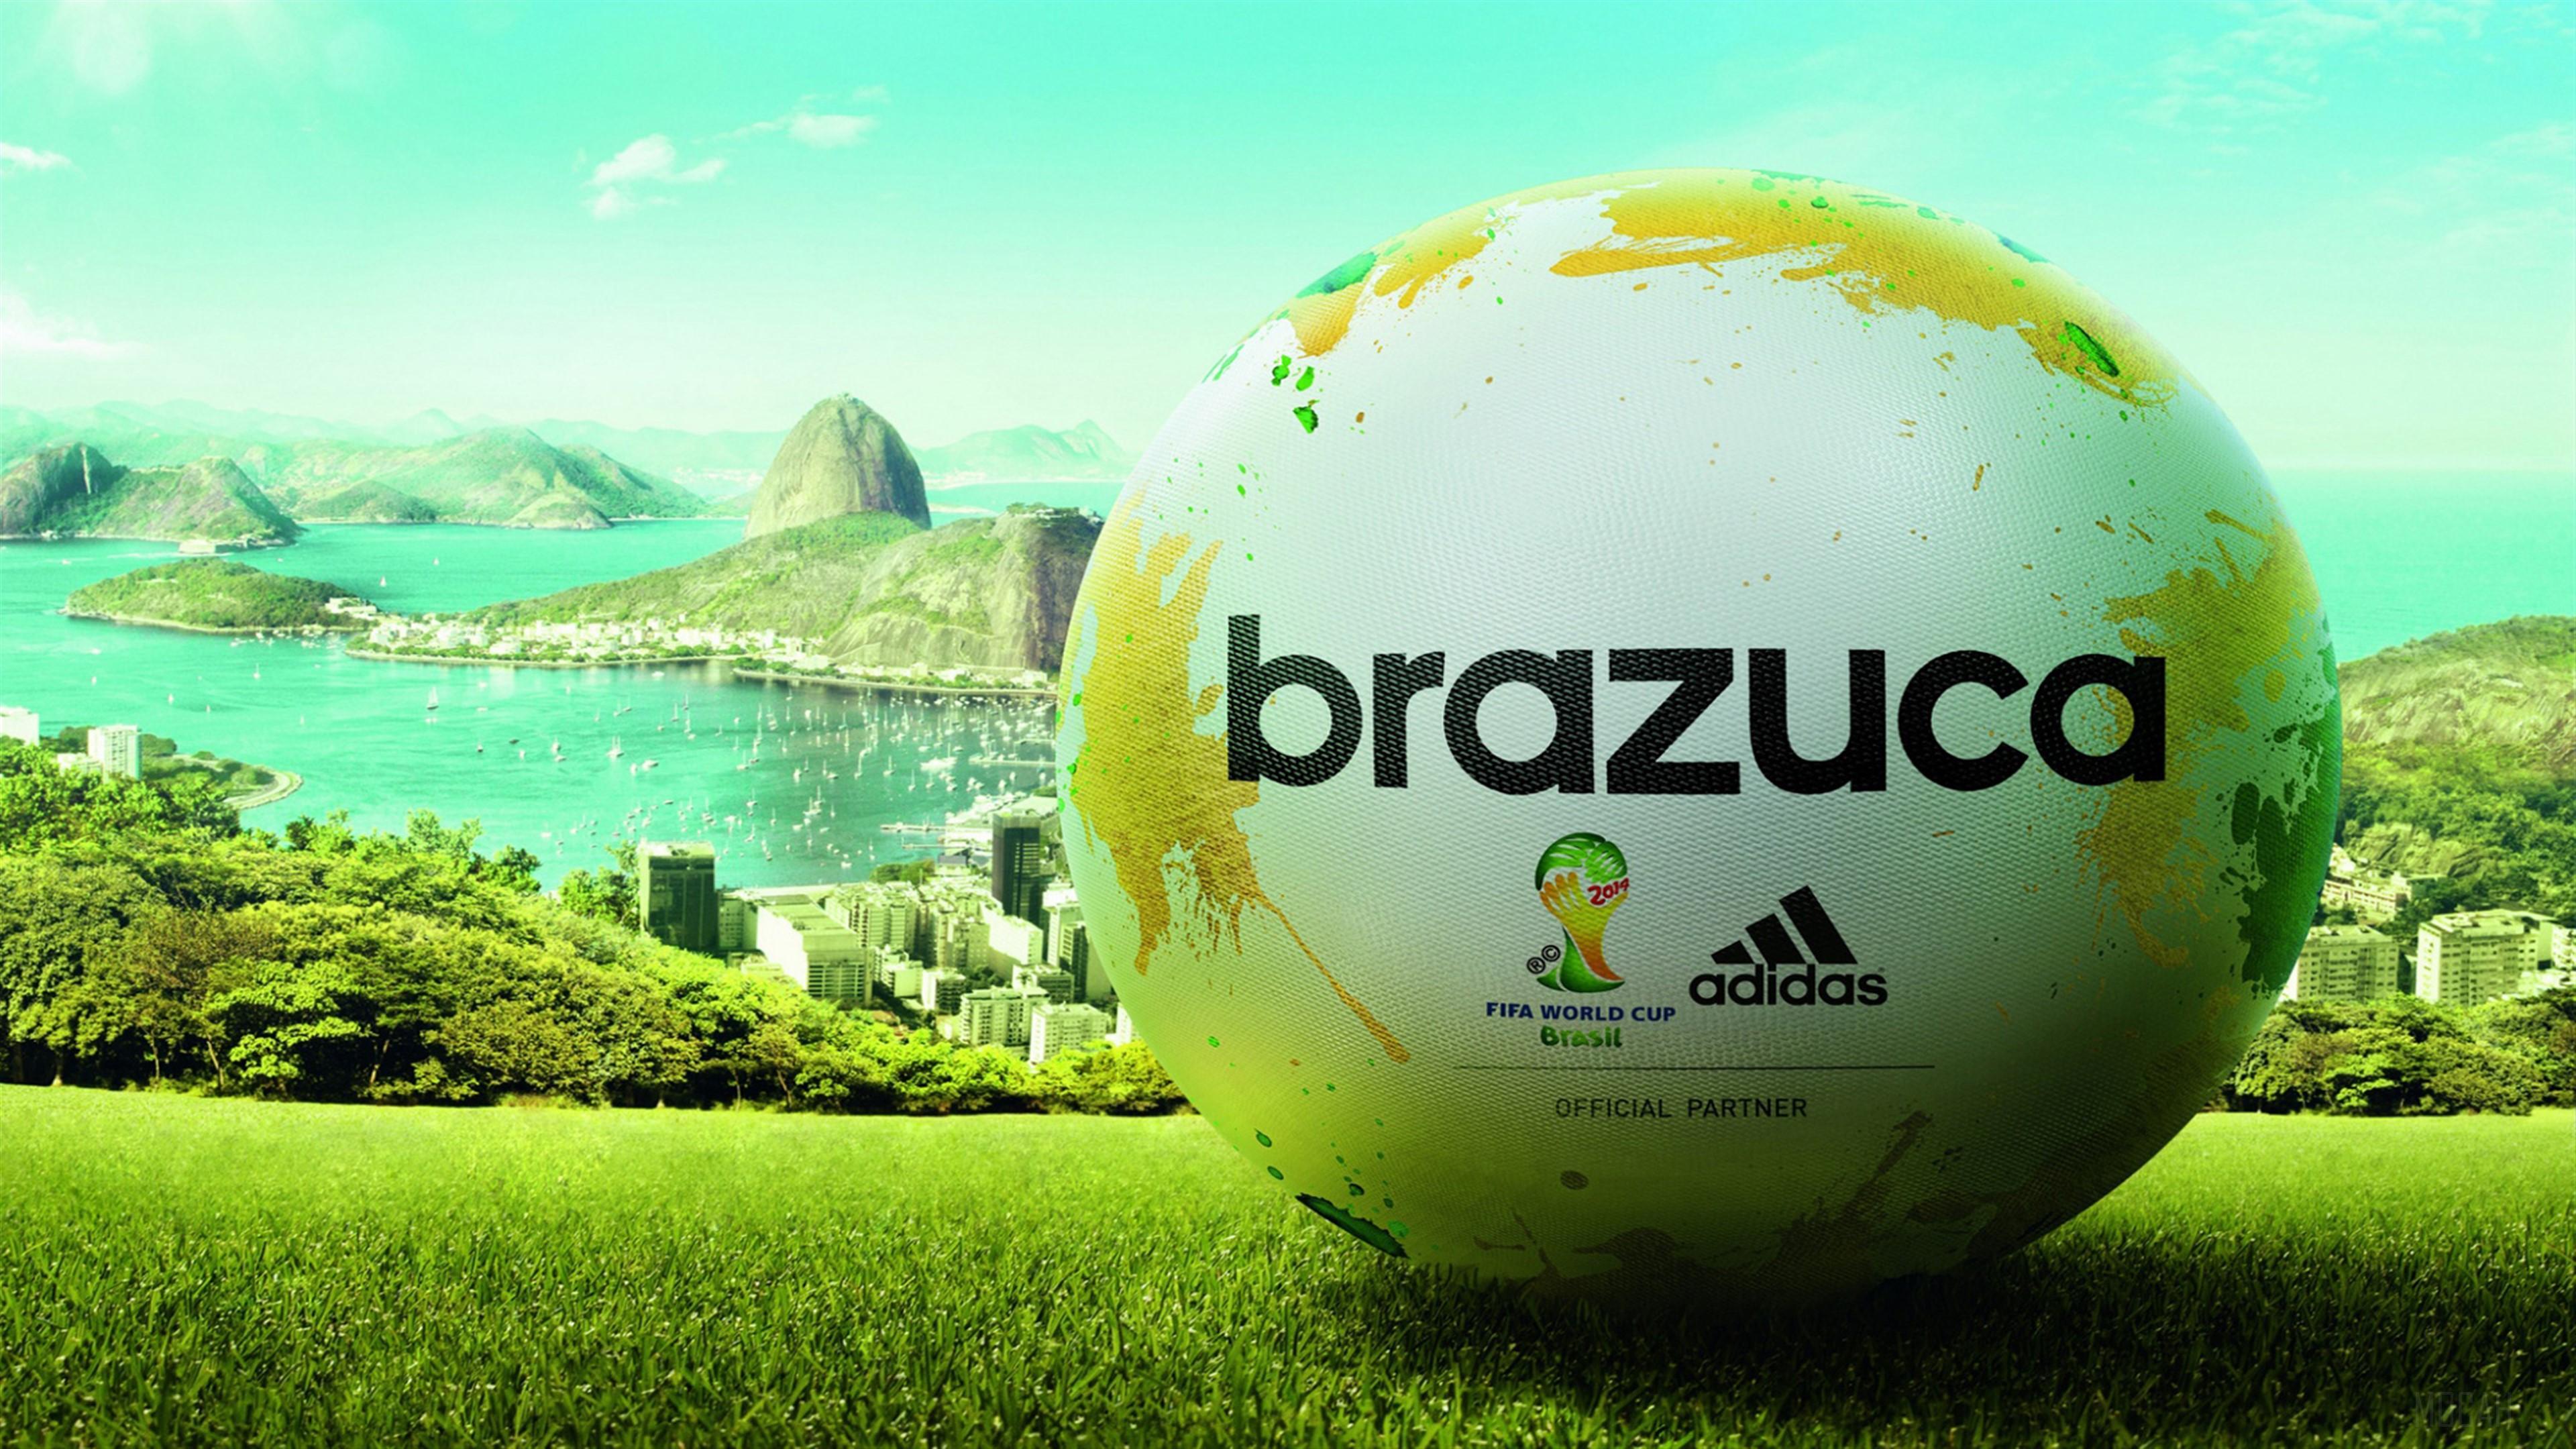 HD wallpaper, Adidas Brazuca Match Ball Fifa World Cup 2014 4K